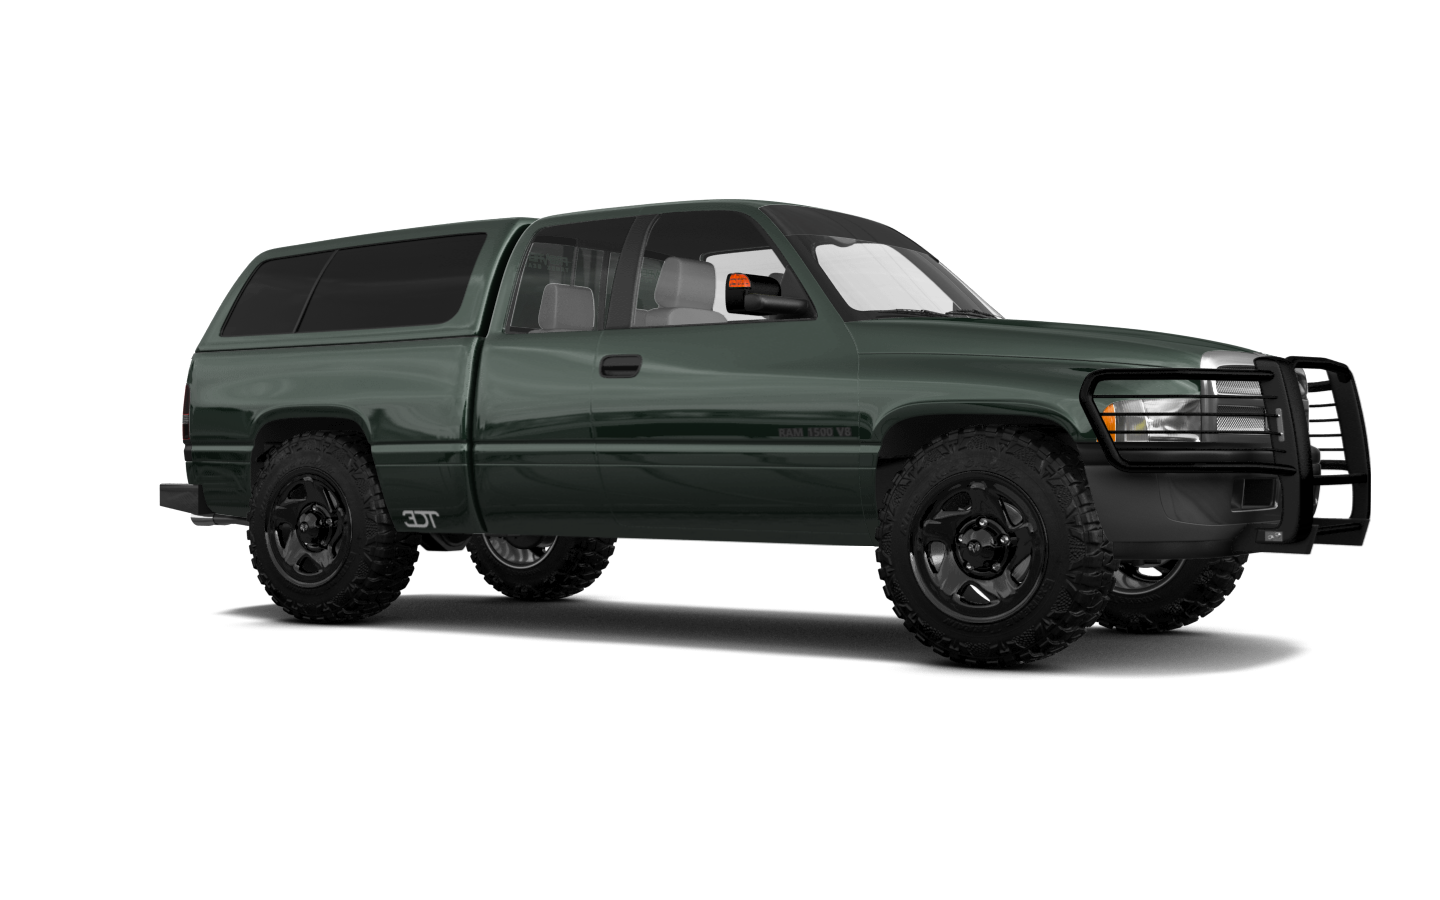 Dodge Ram 1500 Club Cab Pickup Truck 1999